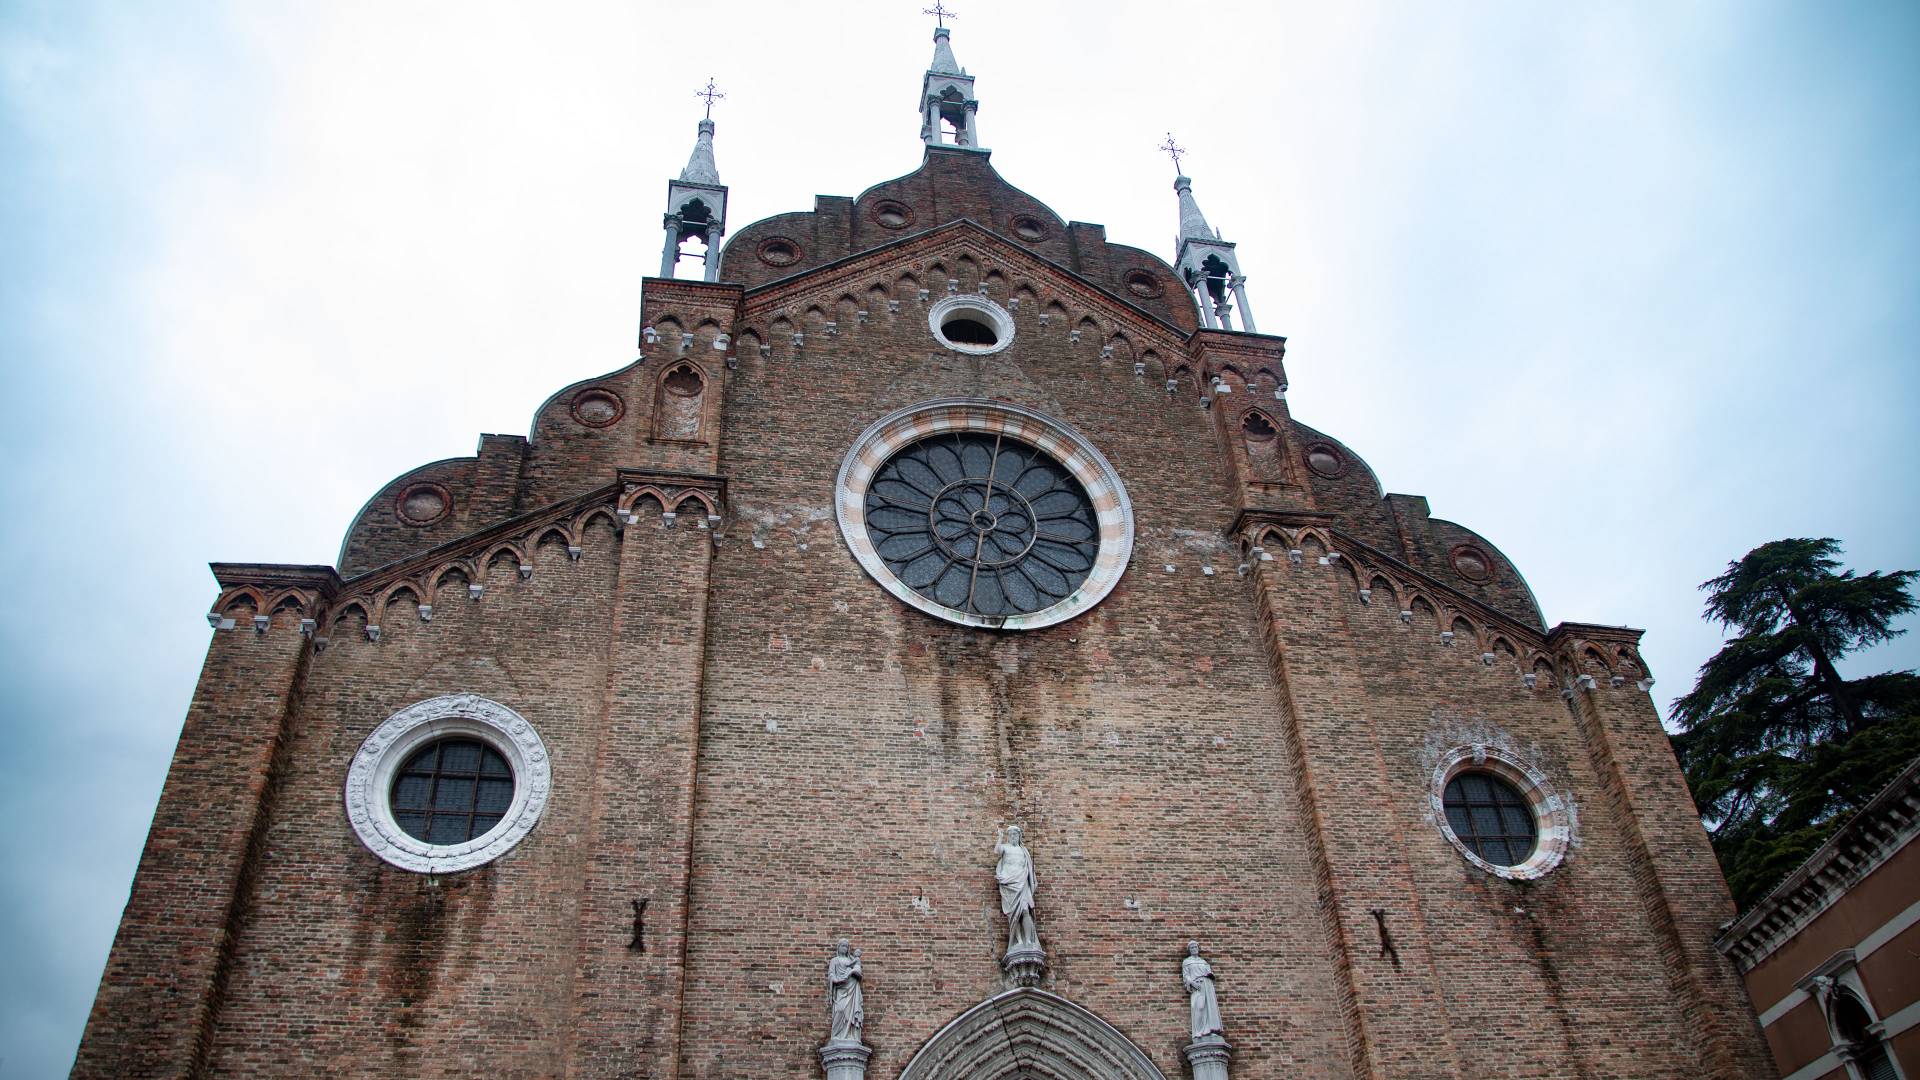 Santa Maria Gloriosa del Frari church in Venice